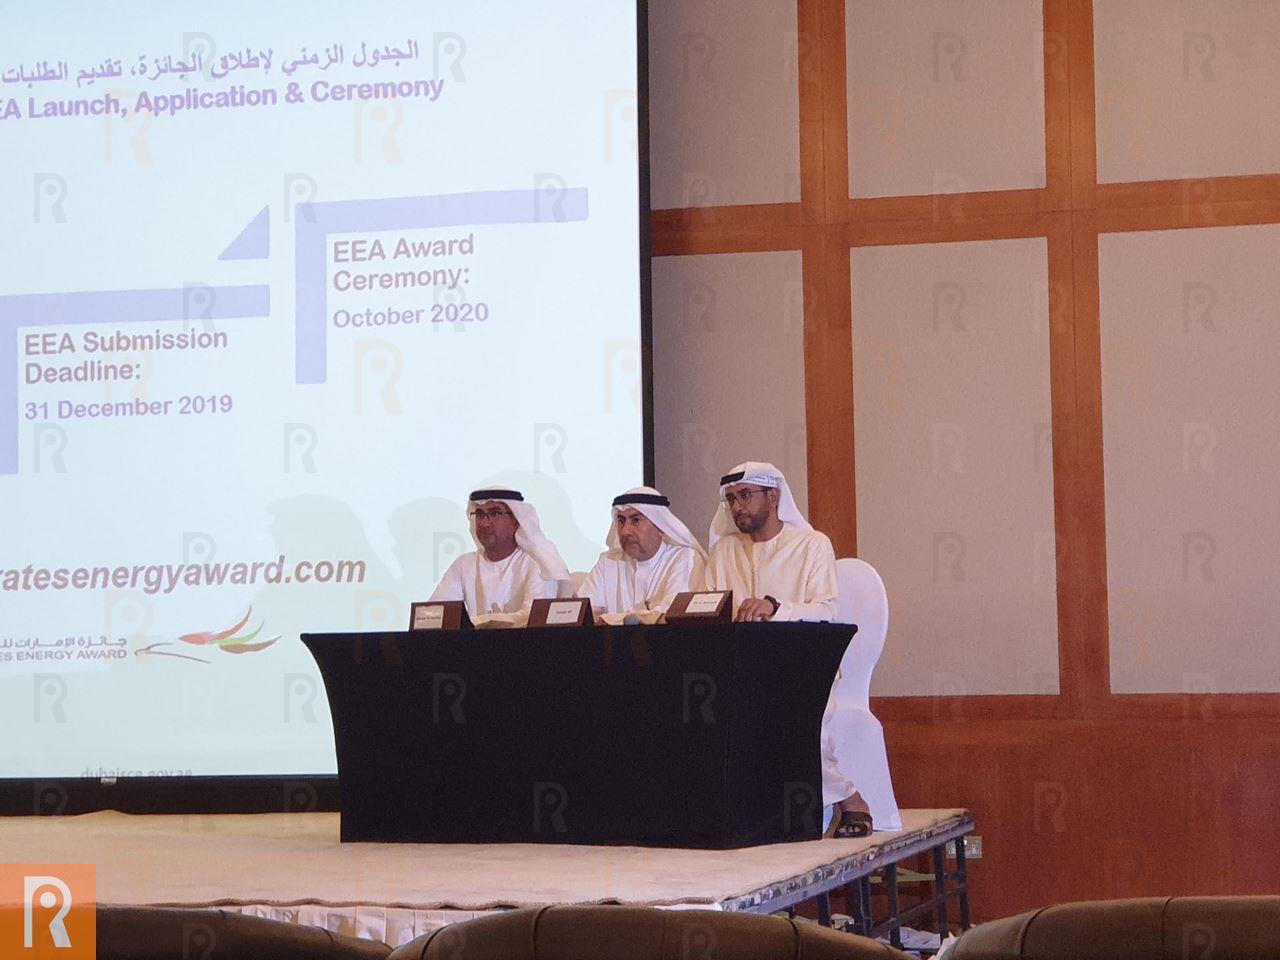 Dubai Supreme Council of Energy organizes a roadshow of the Emirates Energy Award 2020 in Kuwait